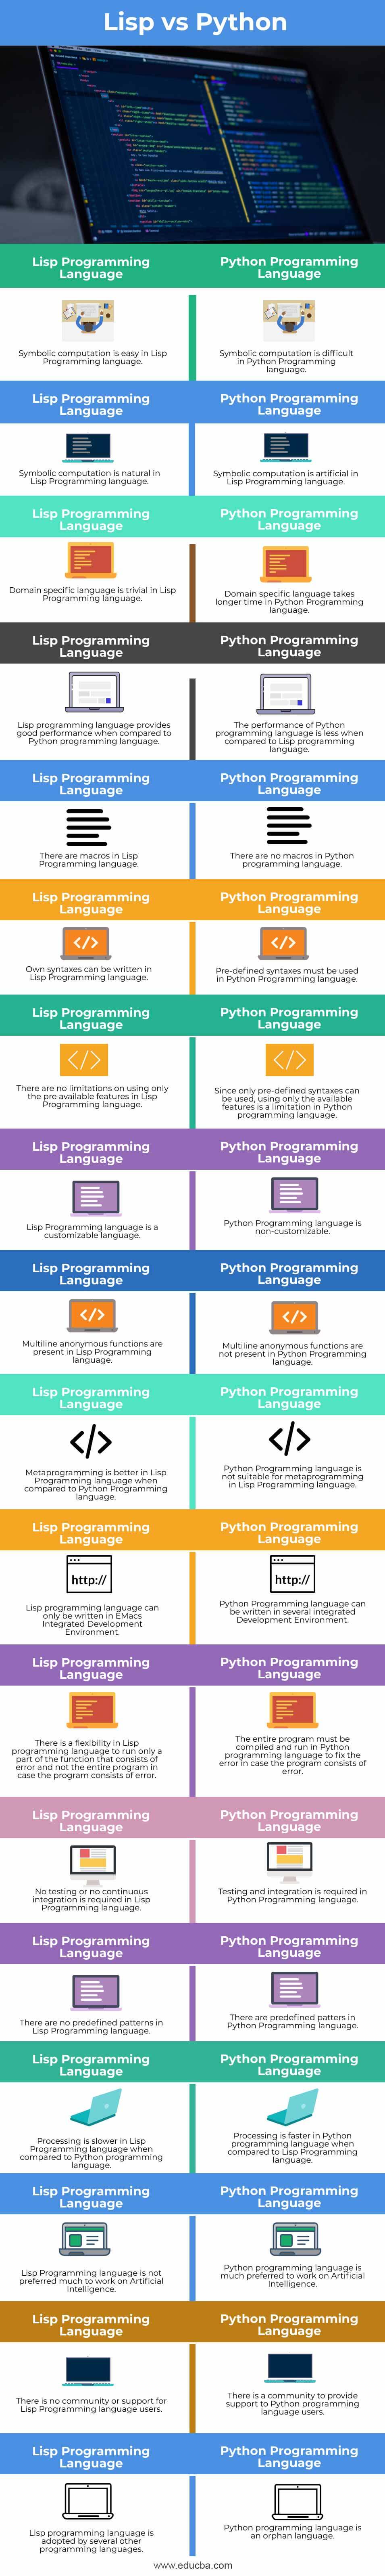 Lisp-vs-Python-info